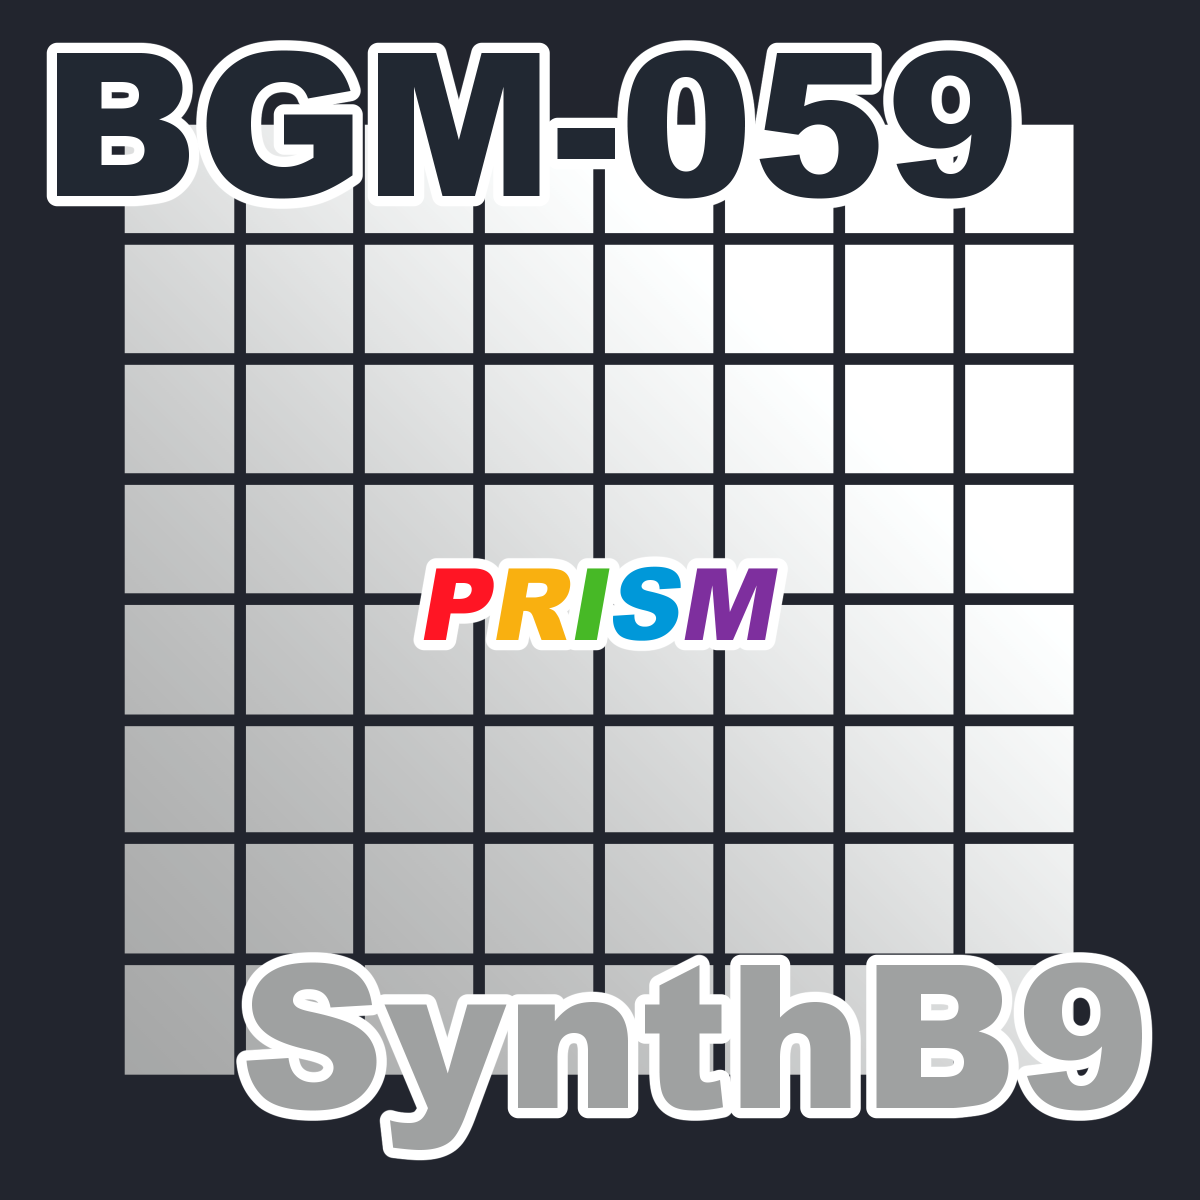 BGM-059 SynthB9 -Short ver.-